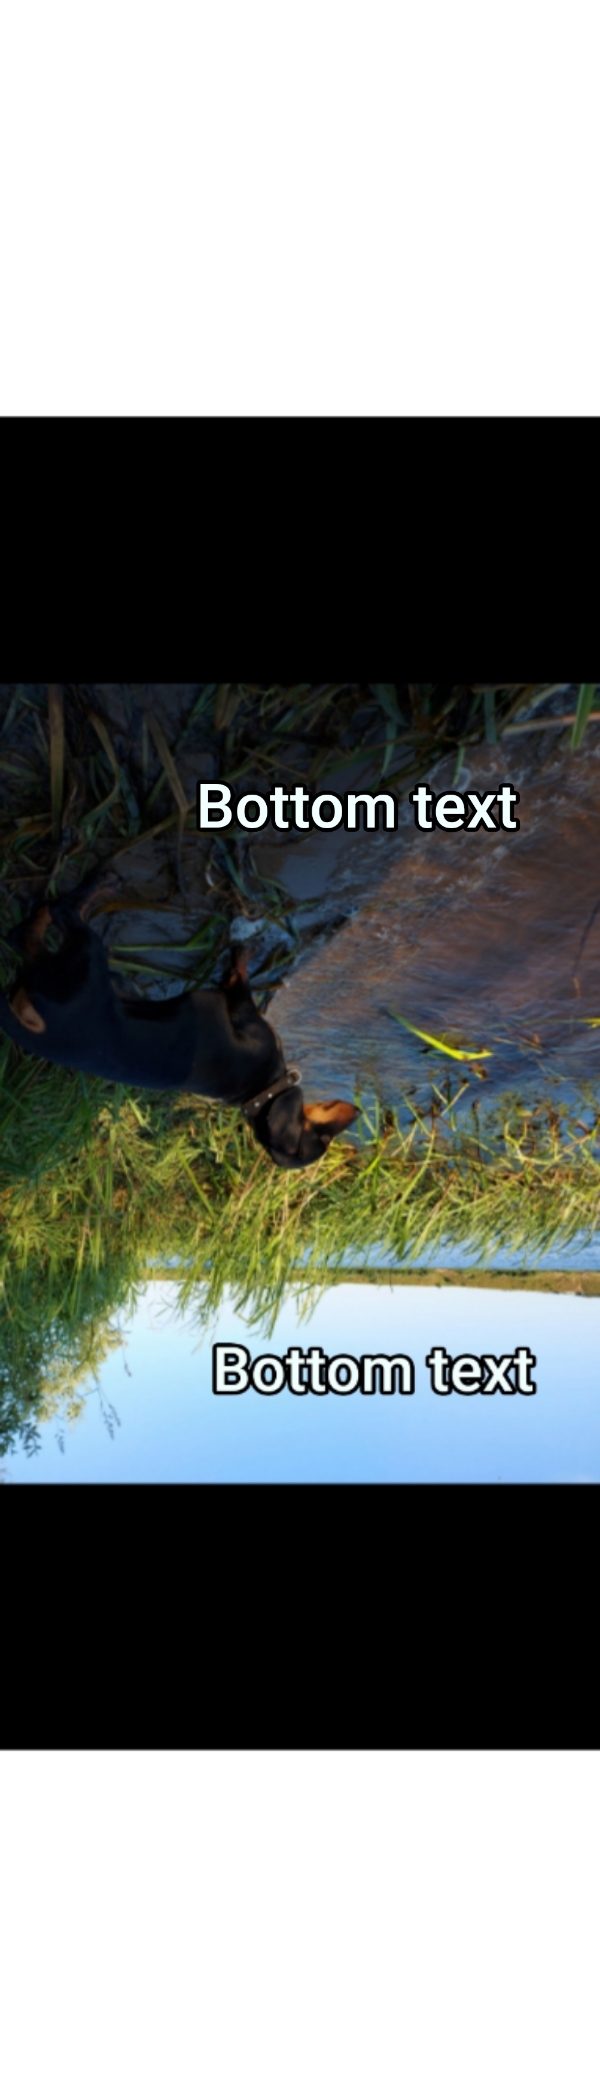 Bottom text 